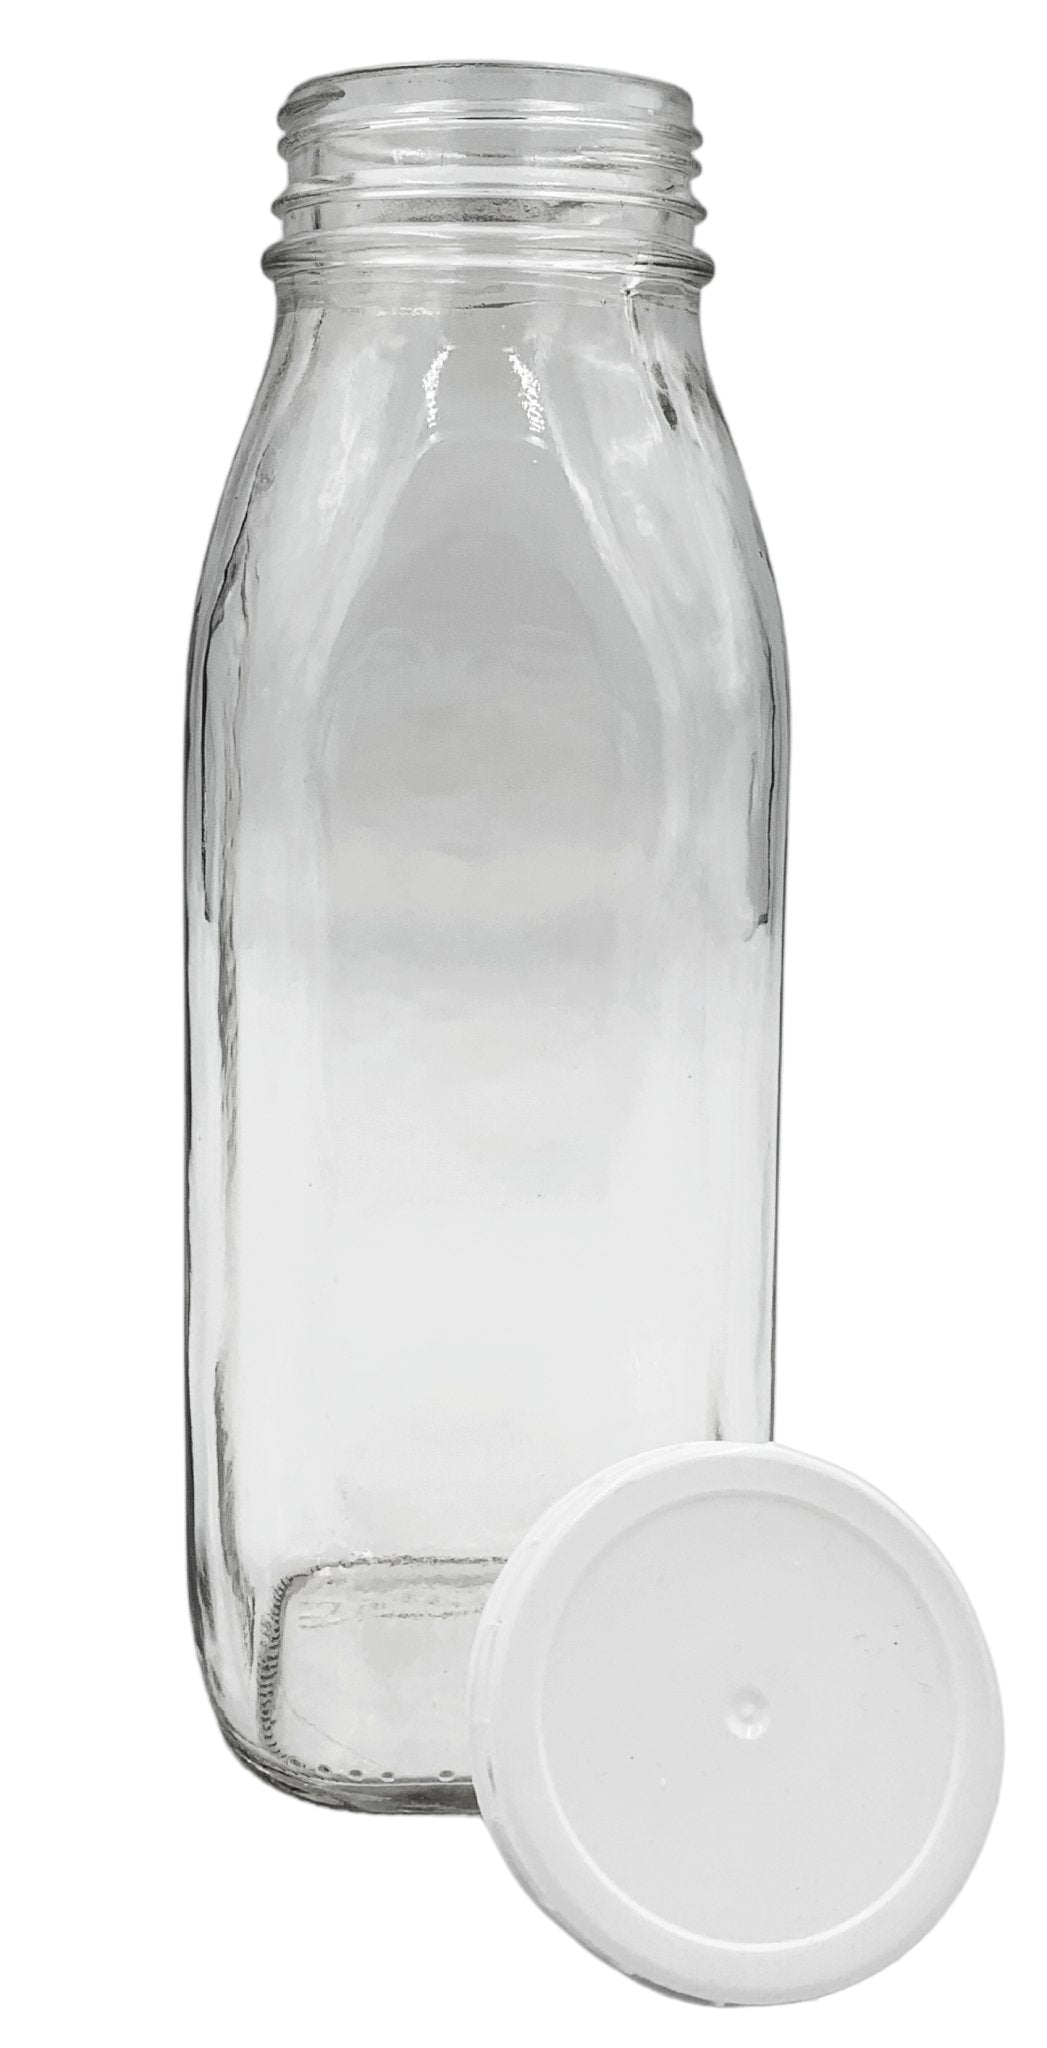 16 oz Clear Glass Short Milk Bottles